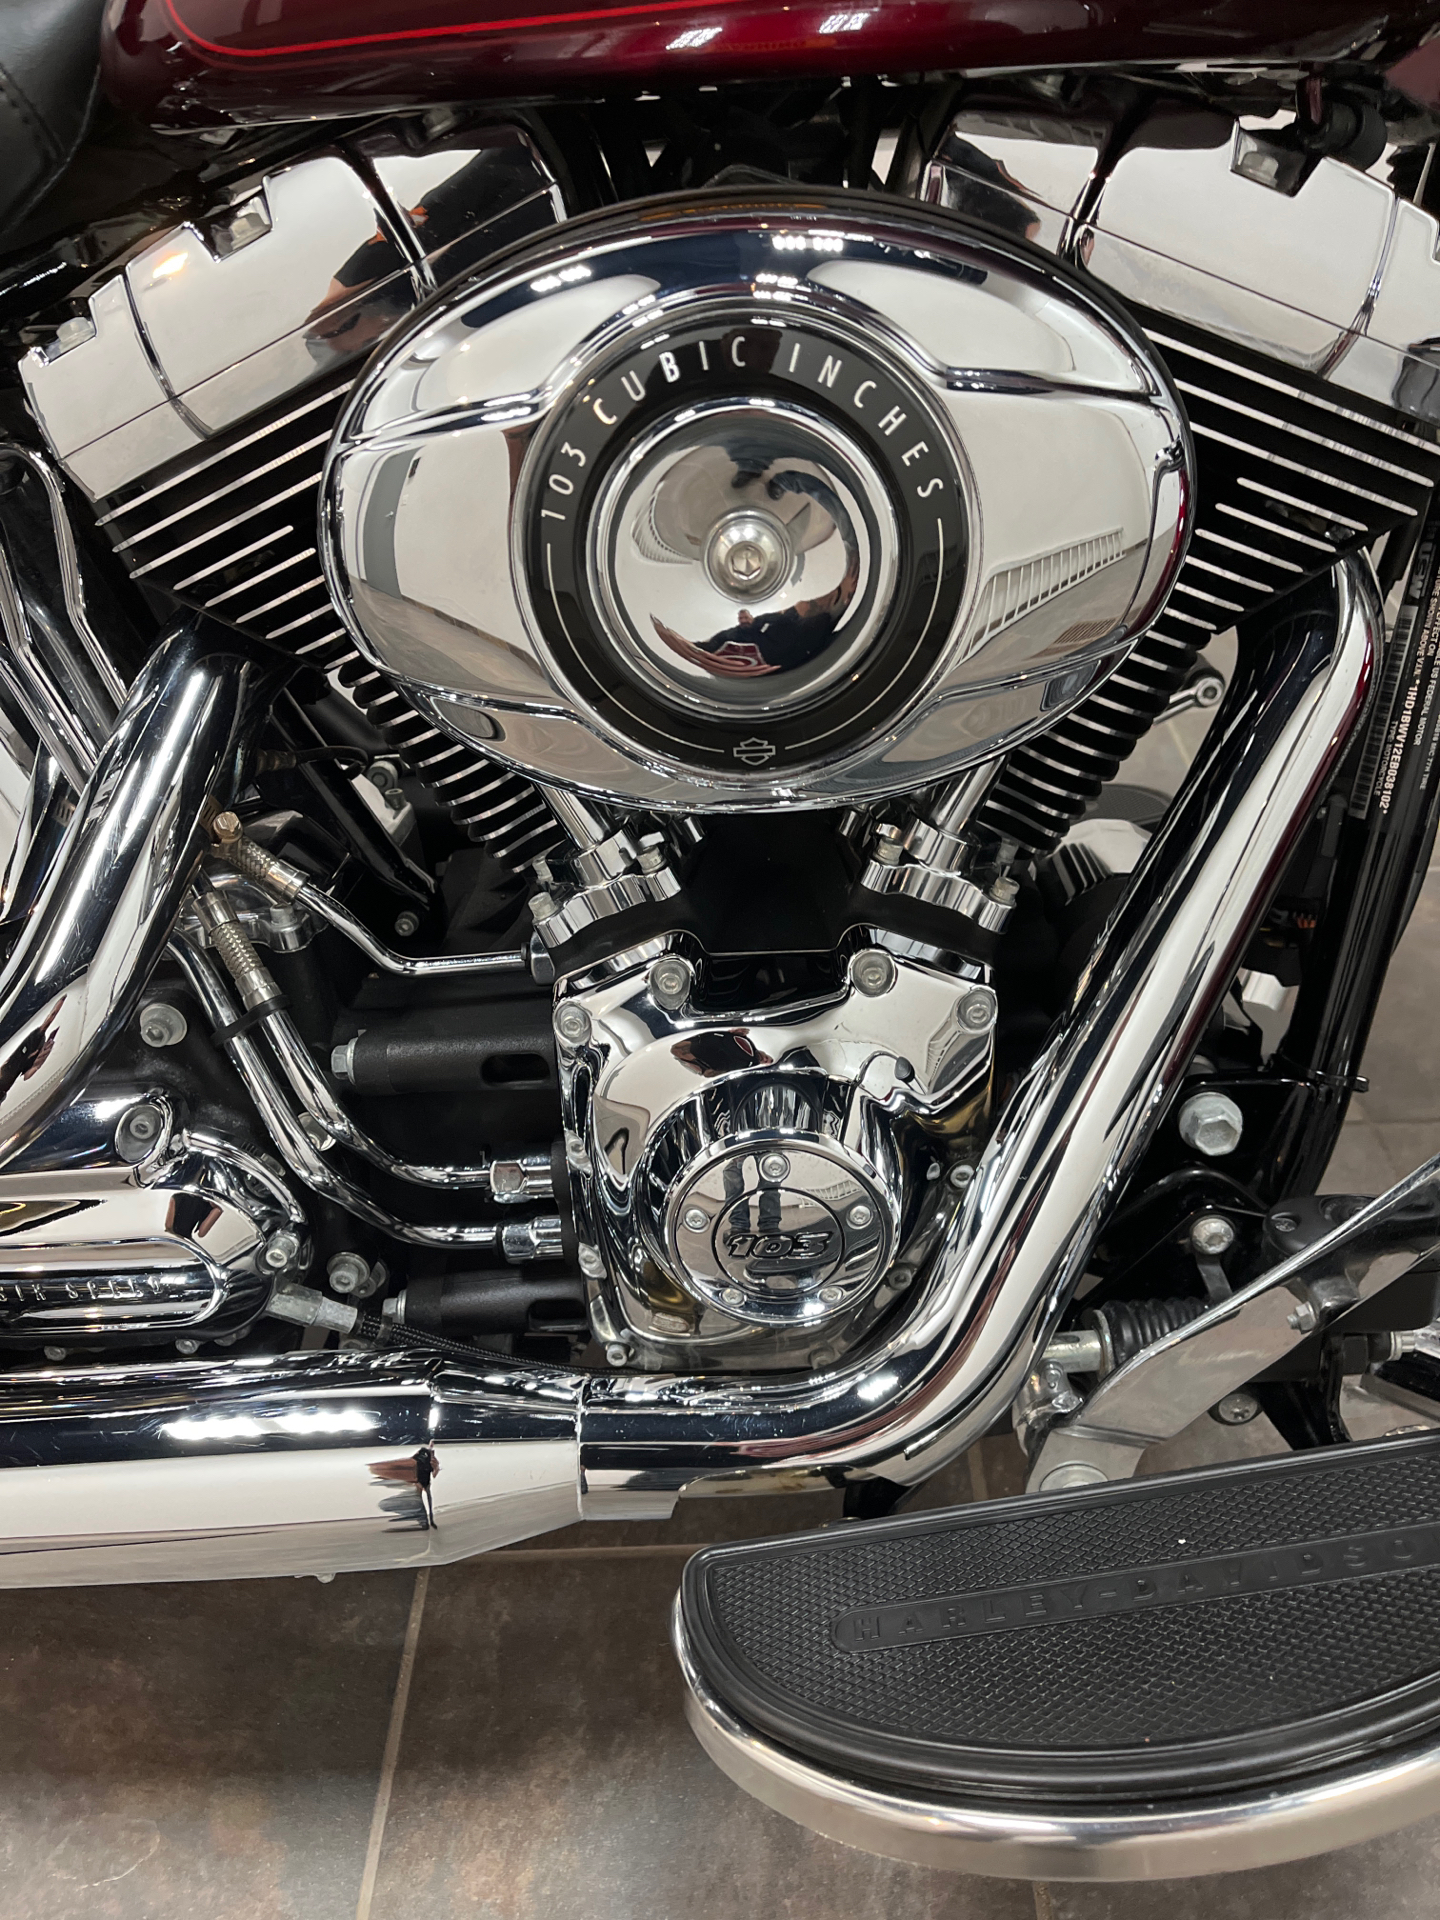 2014 Harley-Davidson Heritage Softail® Classic in Alexandria, Minnesota - Photo 7